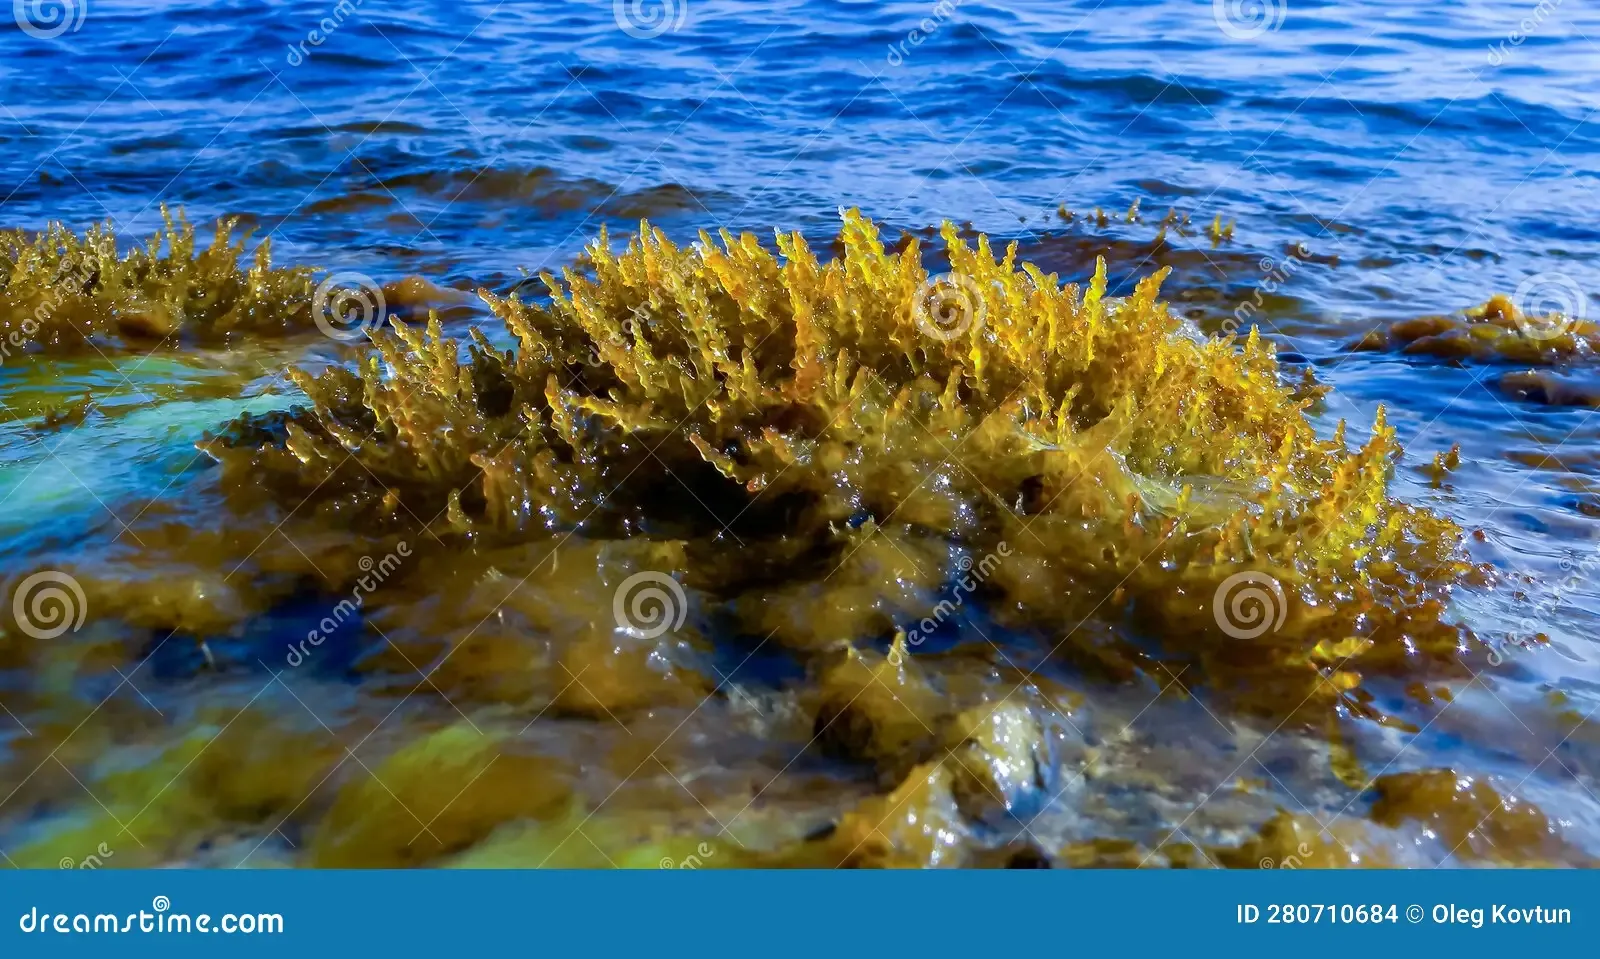 laurencia-papillosa-rhodophyta-algae-stones-water-s-edge-surge-western-crimea-280710684.jpg